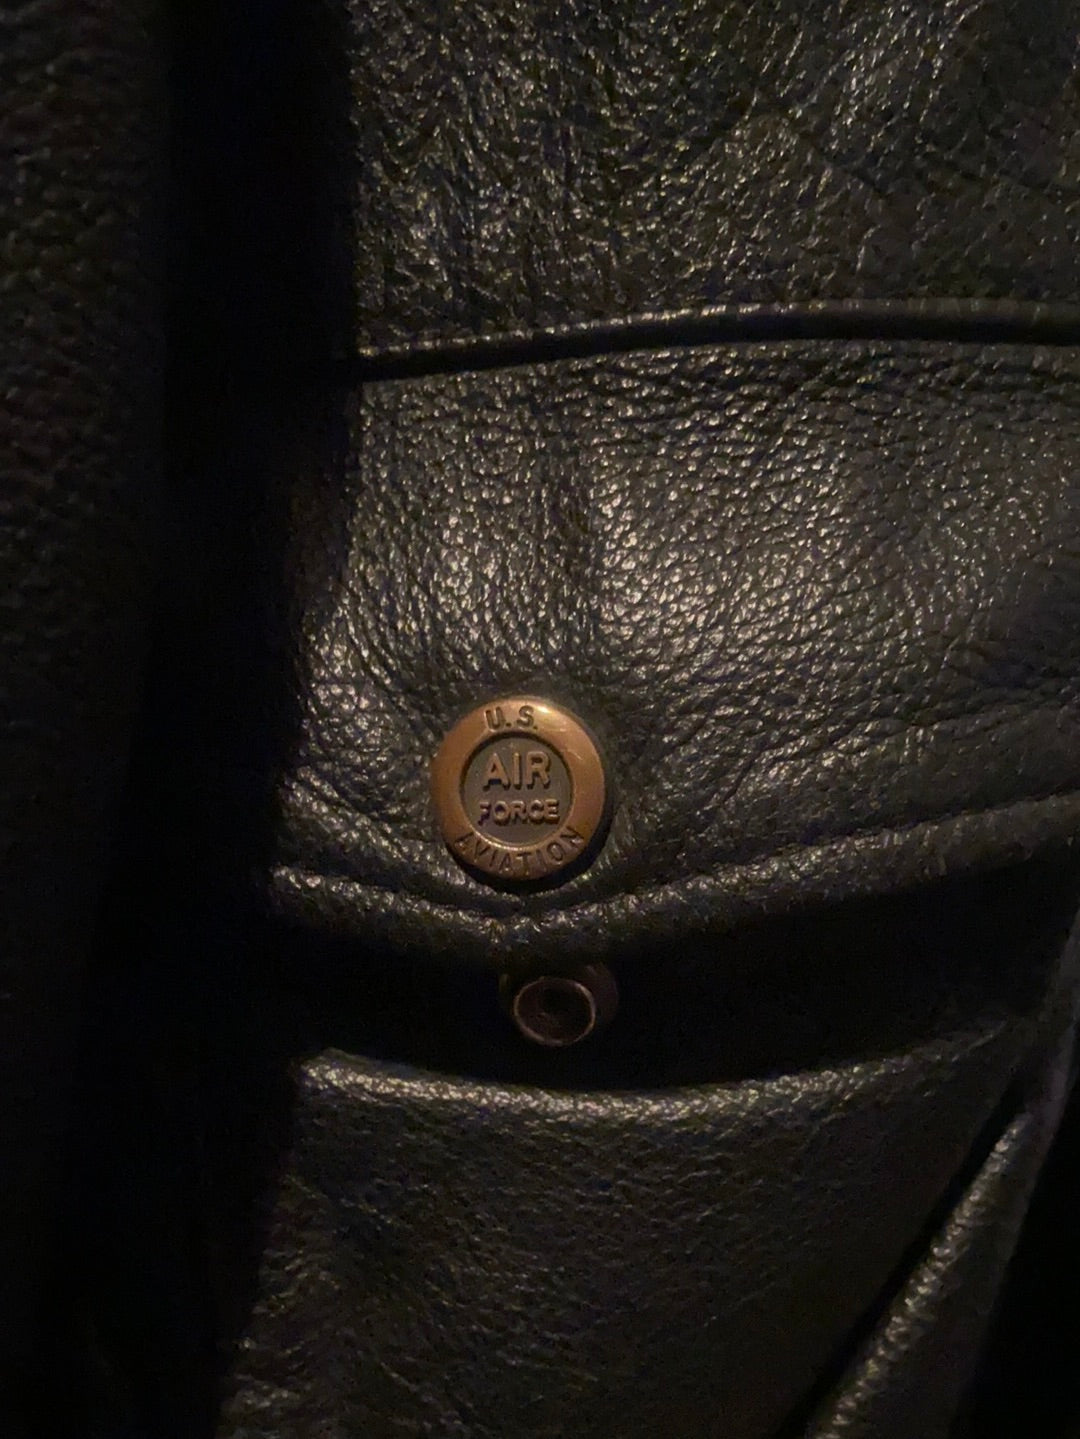 Davidson Motor Leather Jacket